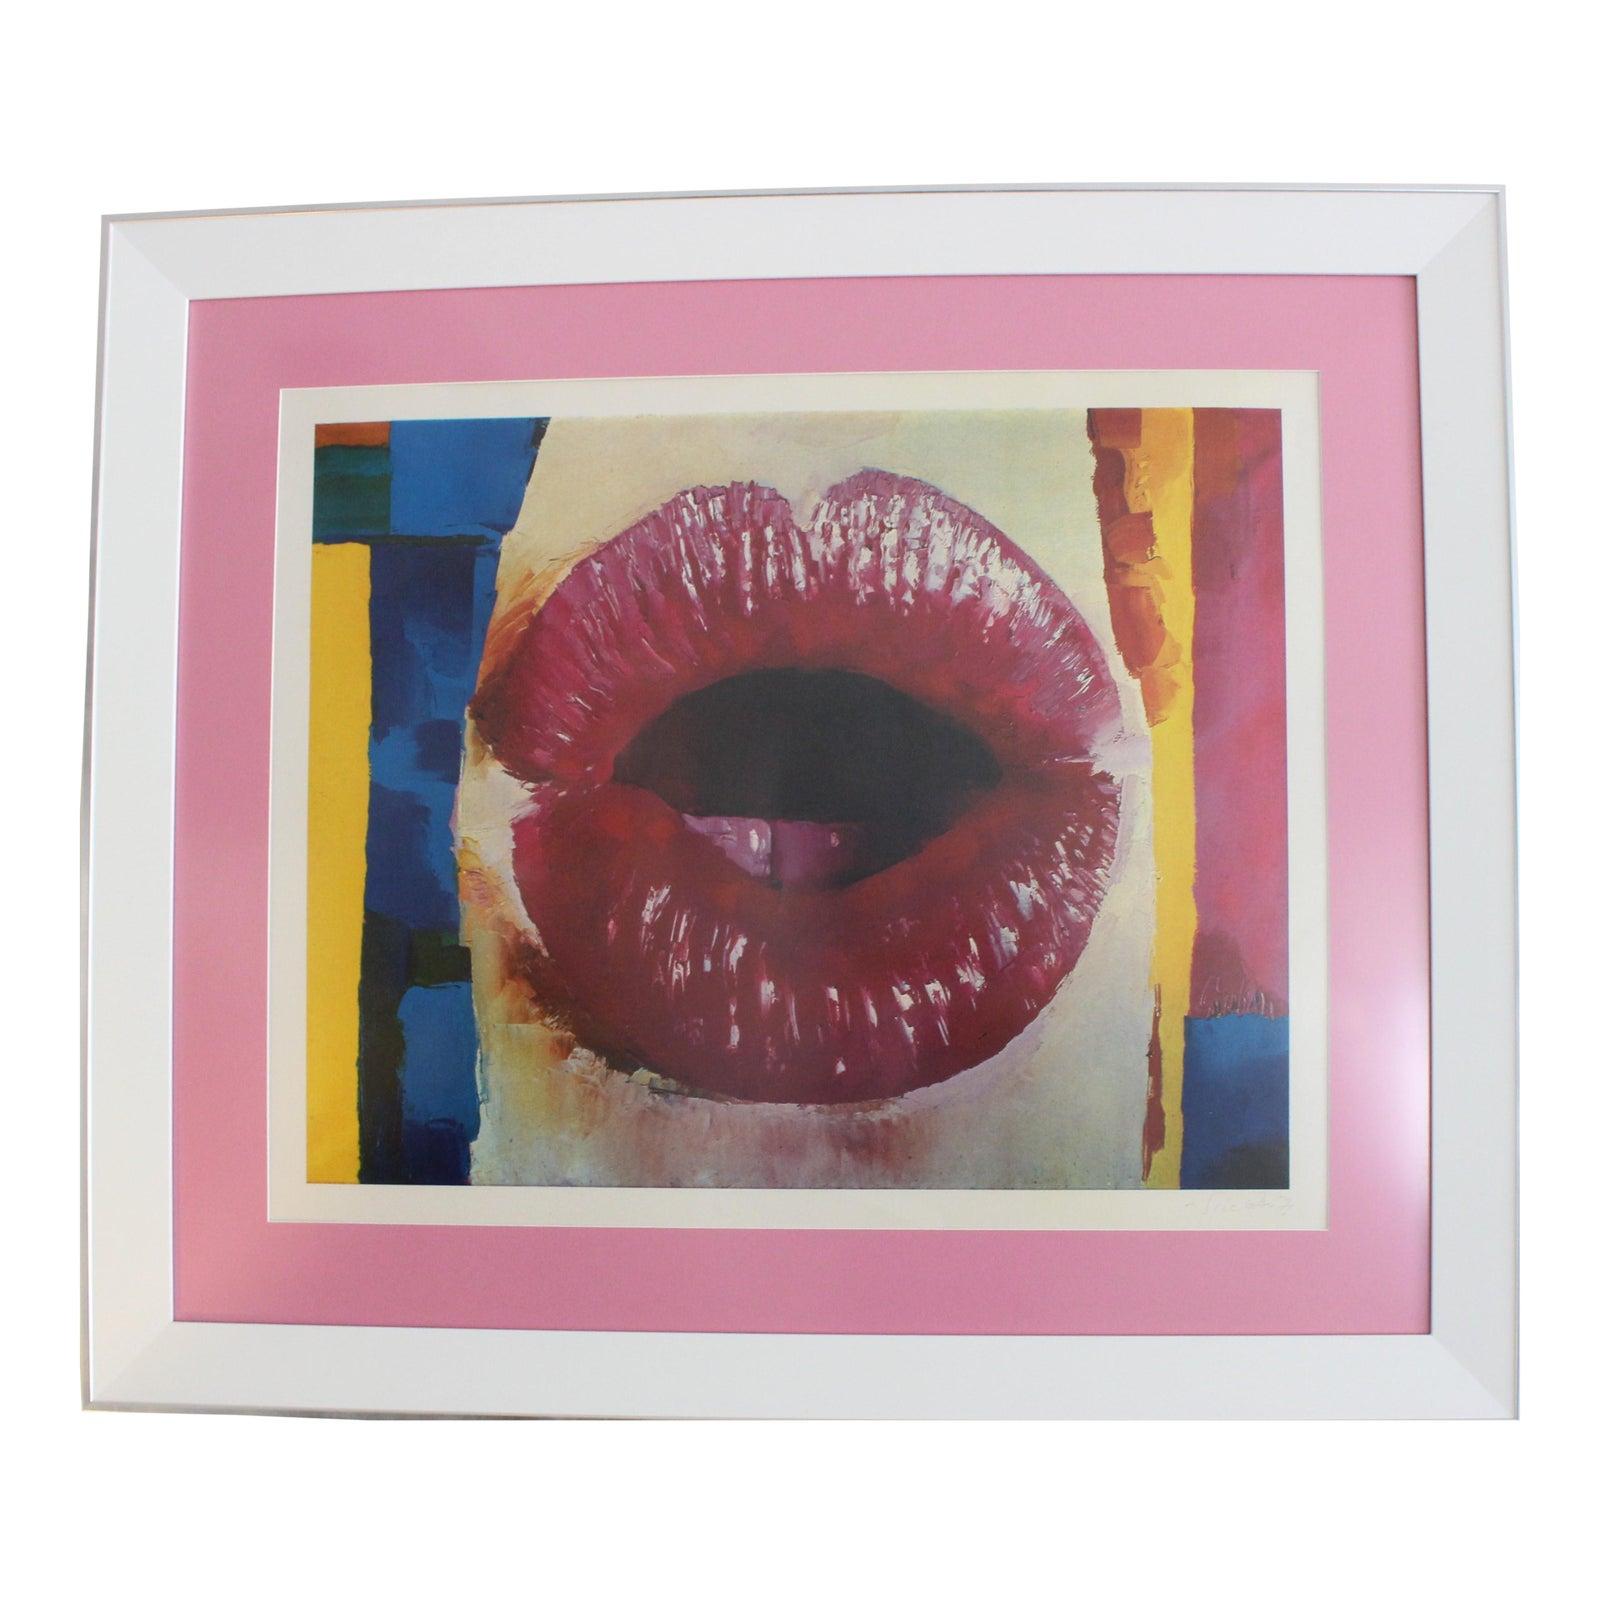 Impression lithographie "Lips" de Nicola Simbari en vente